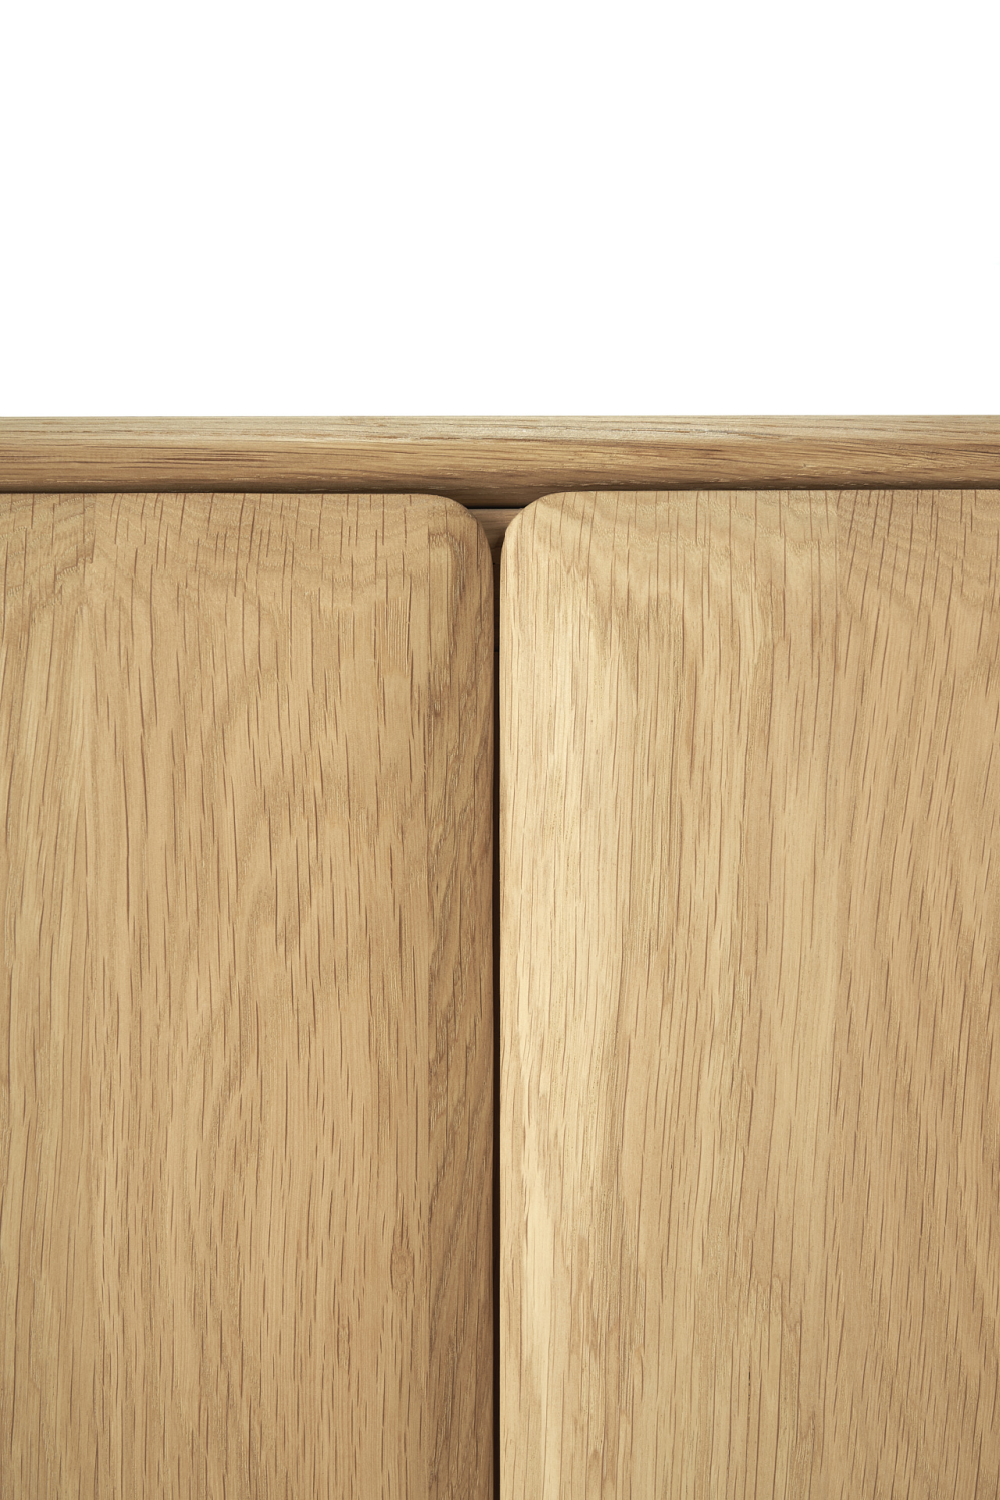 Oiled Oak Sideboard | Ethnicraft PI | Woodfurniture.com